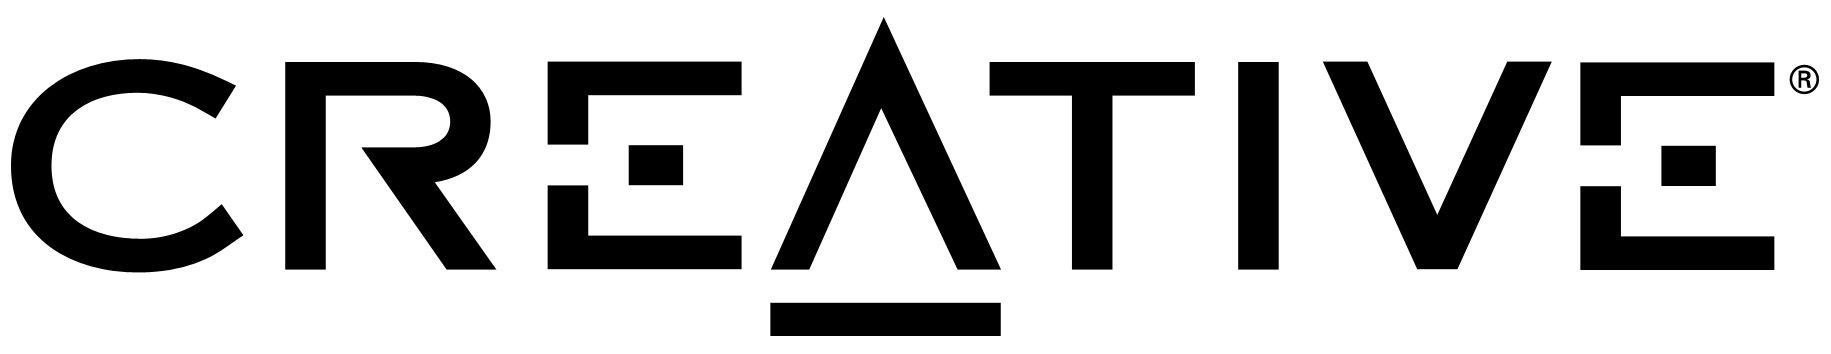 Logo creative